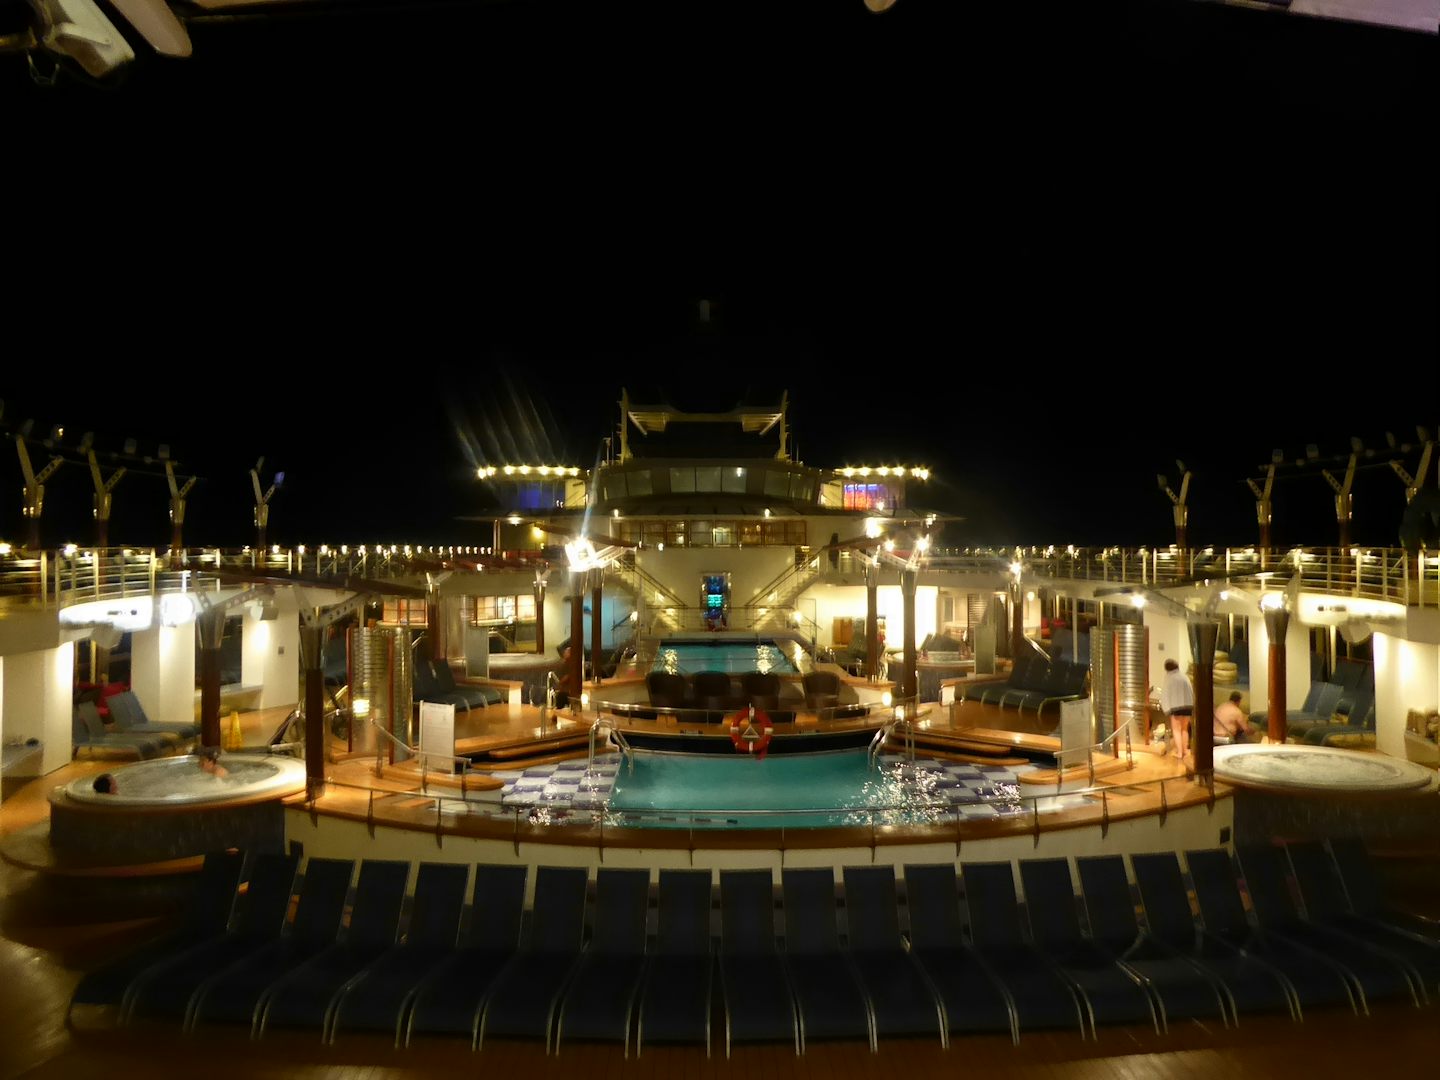 Top deck at night